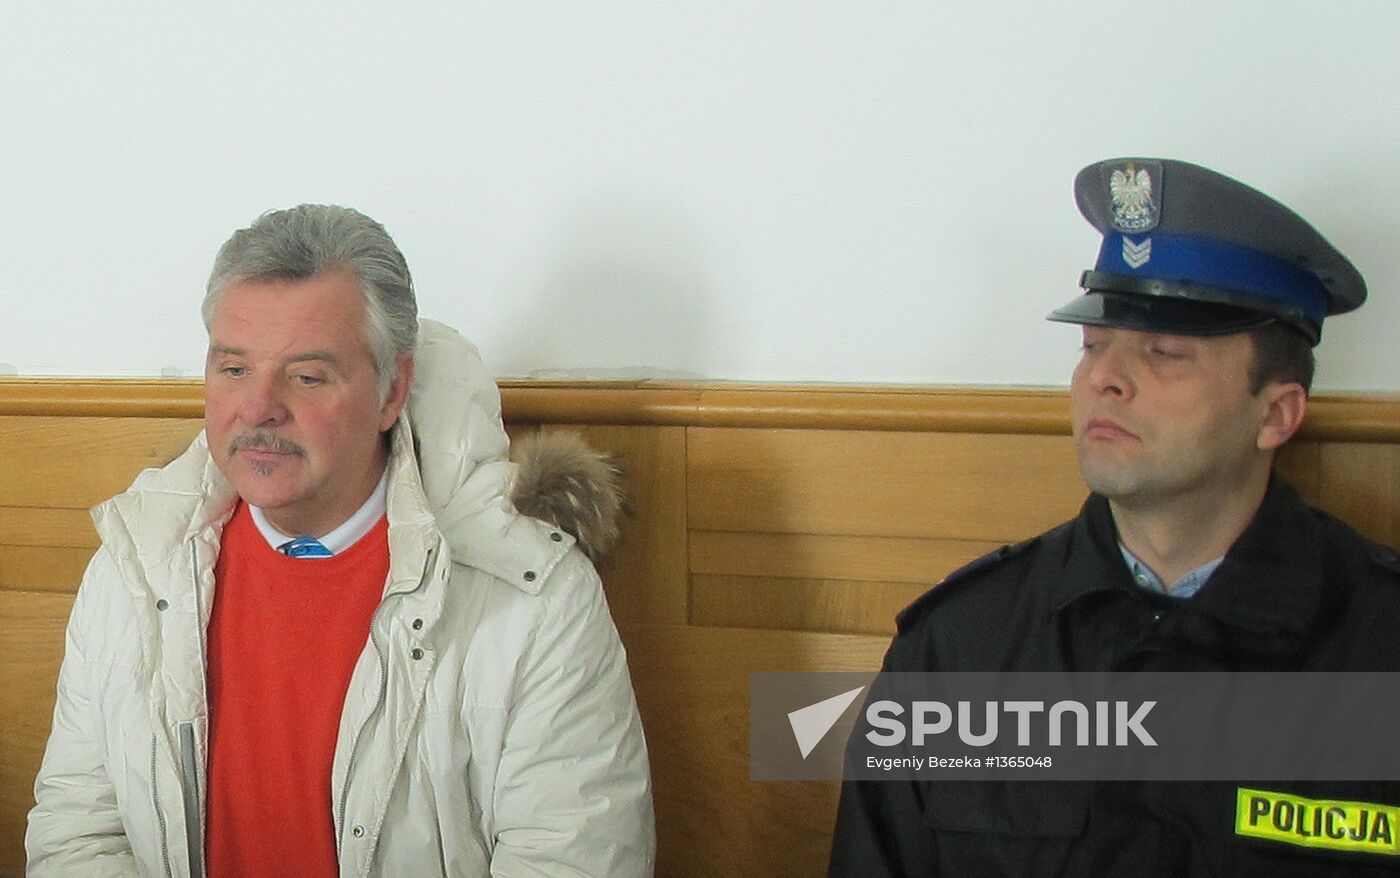 Court hearing on case of Alexander Ignatenko in Poland